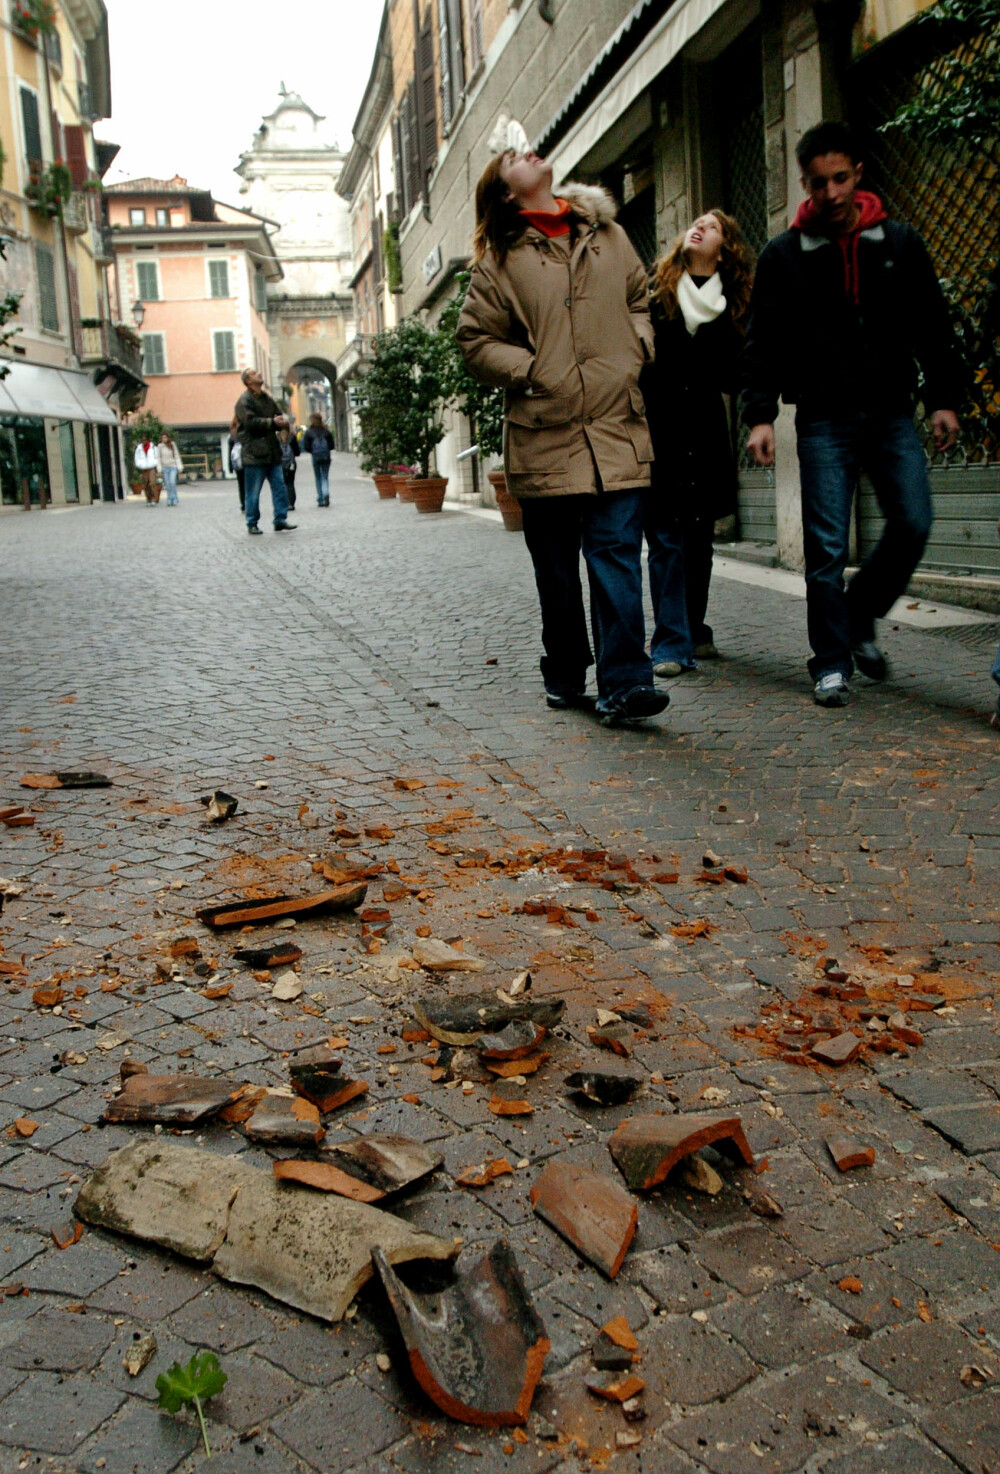 Preot roman din Italia: Aici e un cutremur la fiecare 15 minute! - Imaginea 3